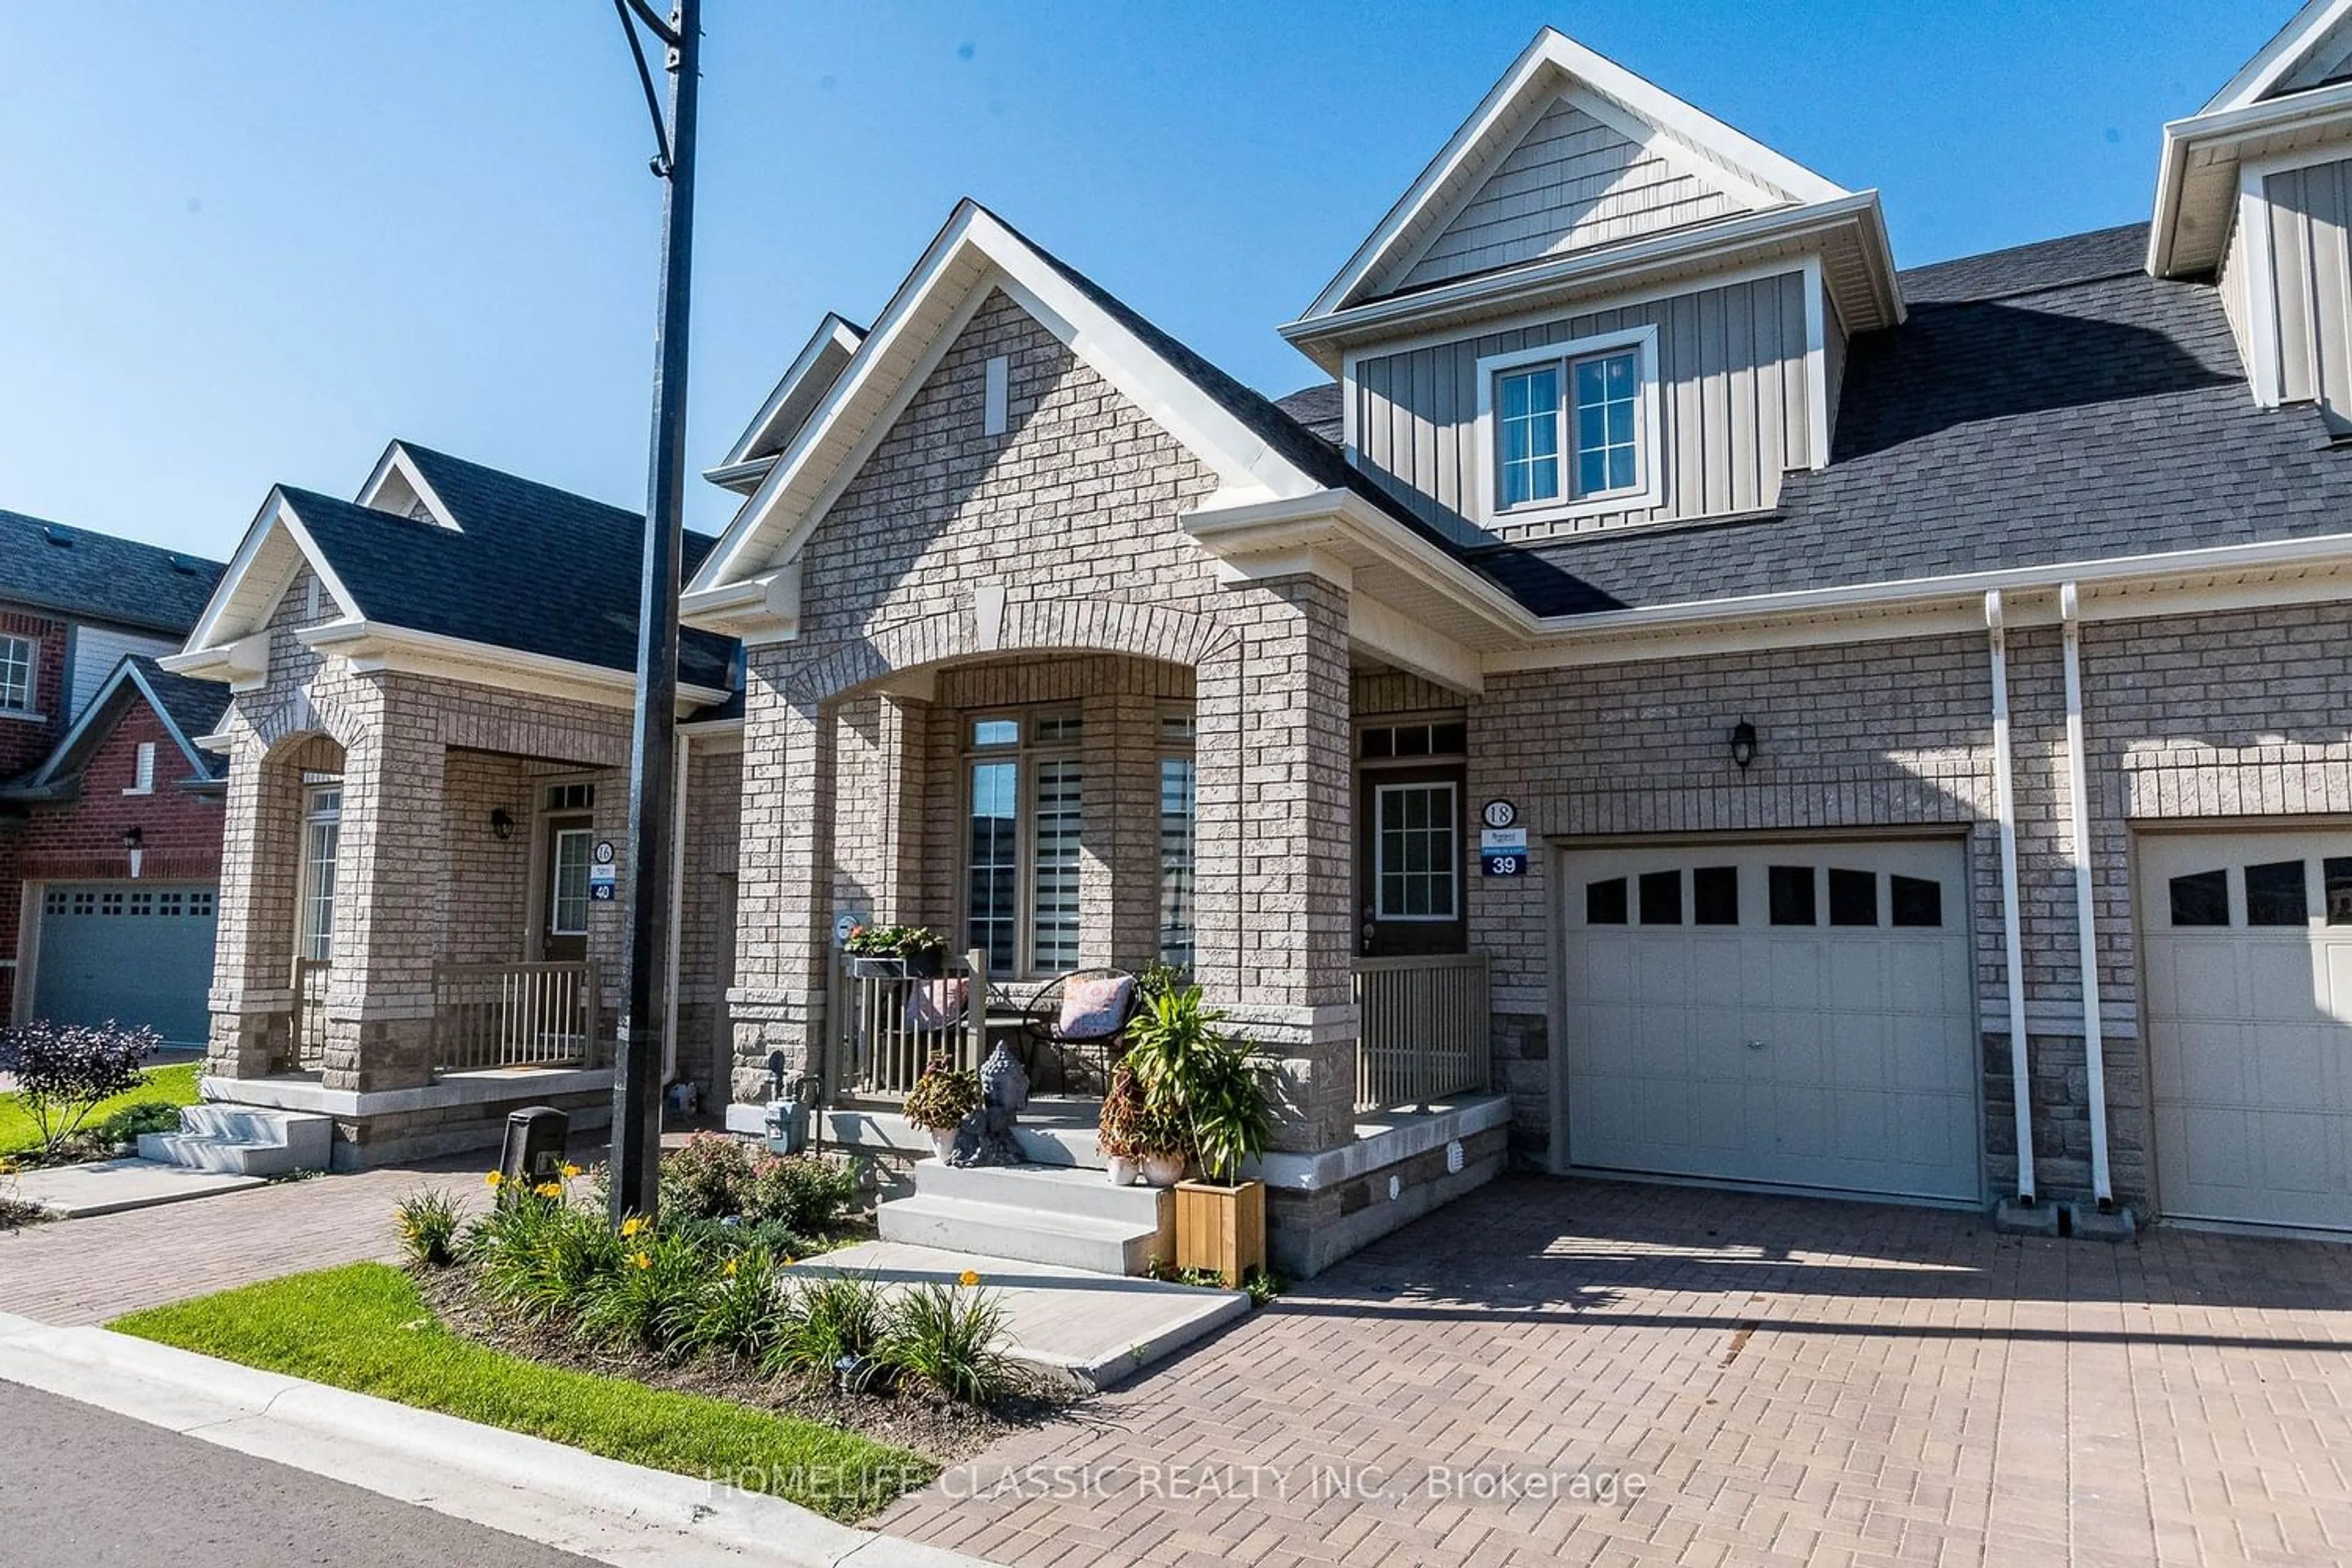 Home with brick exterior material for 18 Bluestone Cres, Brampton Ontario L6R 4B8